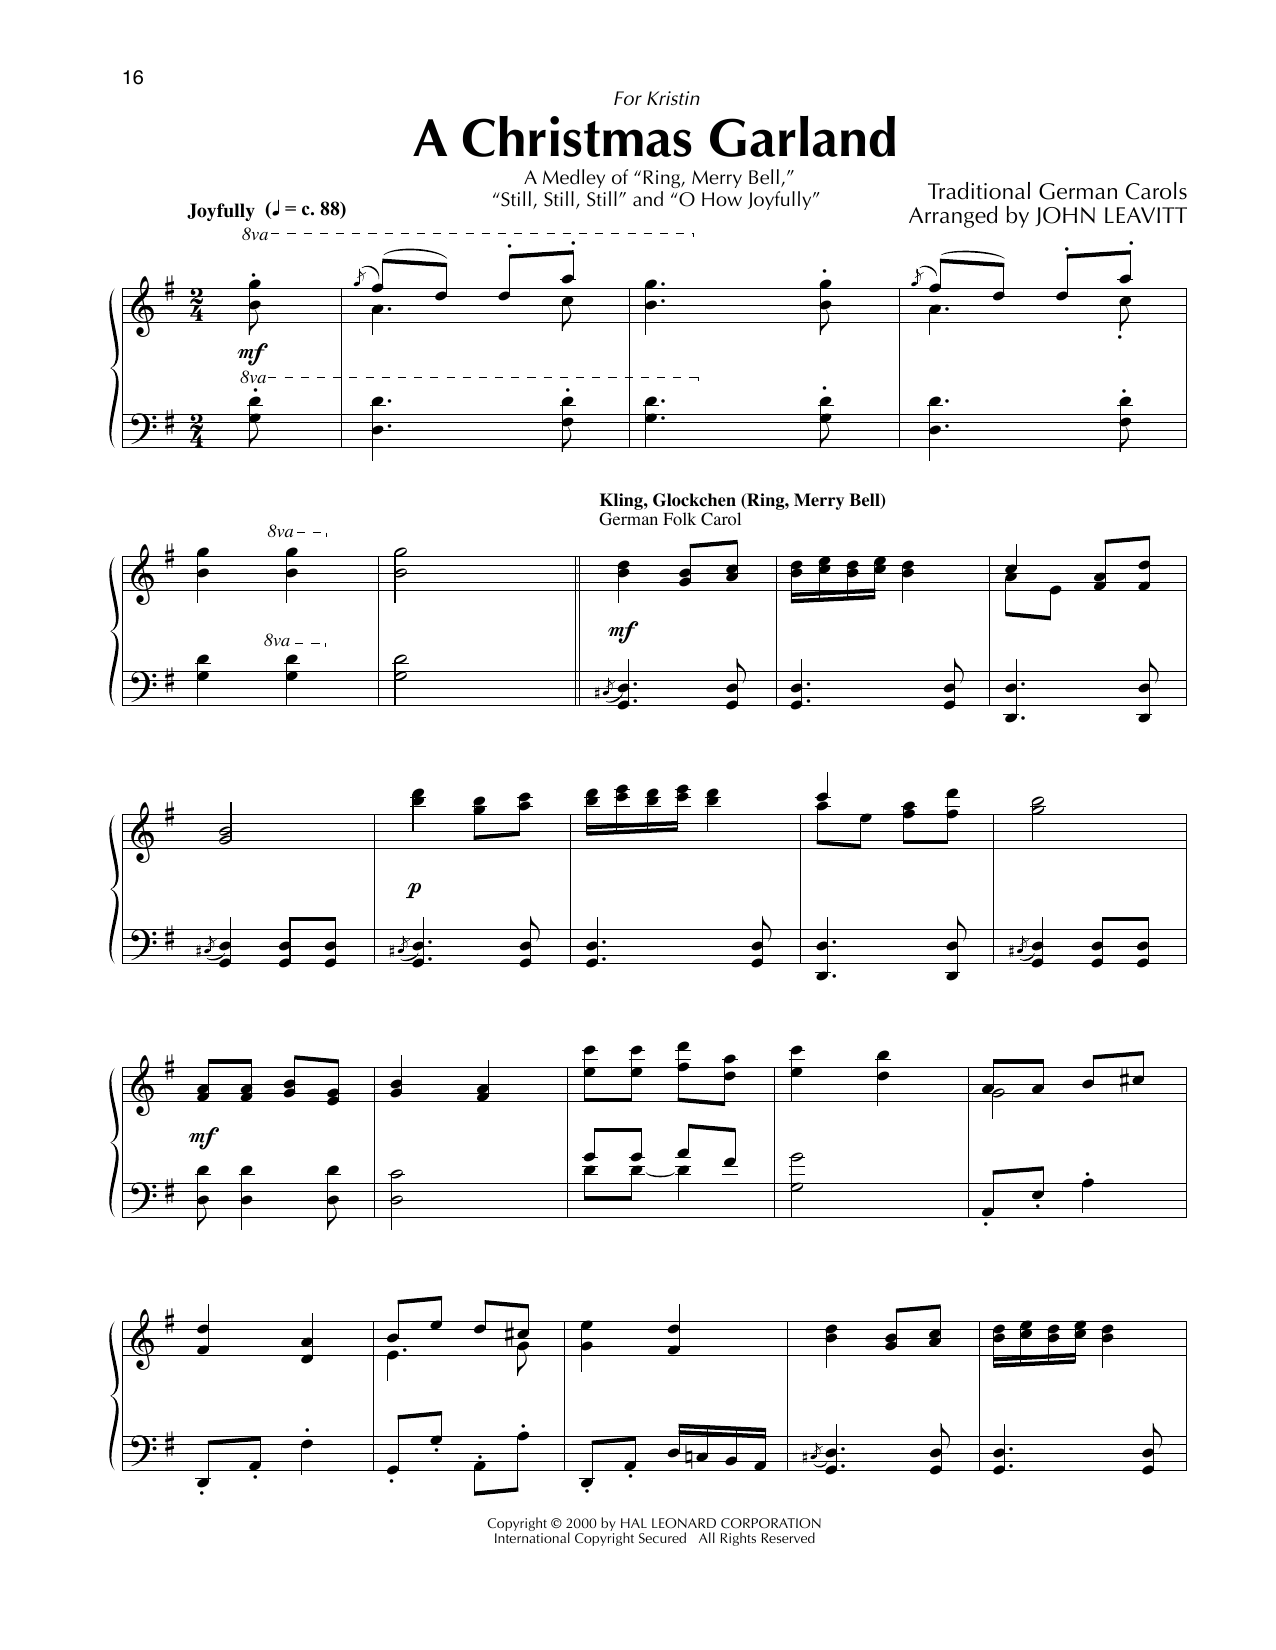 Traditional German Carols A Christmas Garland (arr. John Leavitt) Sheet Music Notes & Chords for Piano Solo - Download or Print PDF